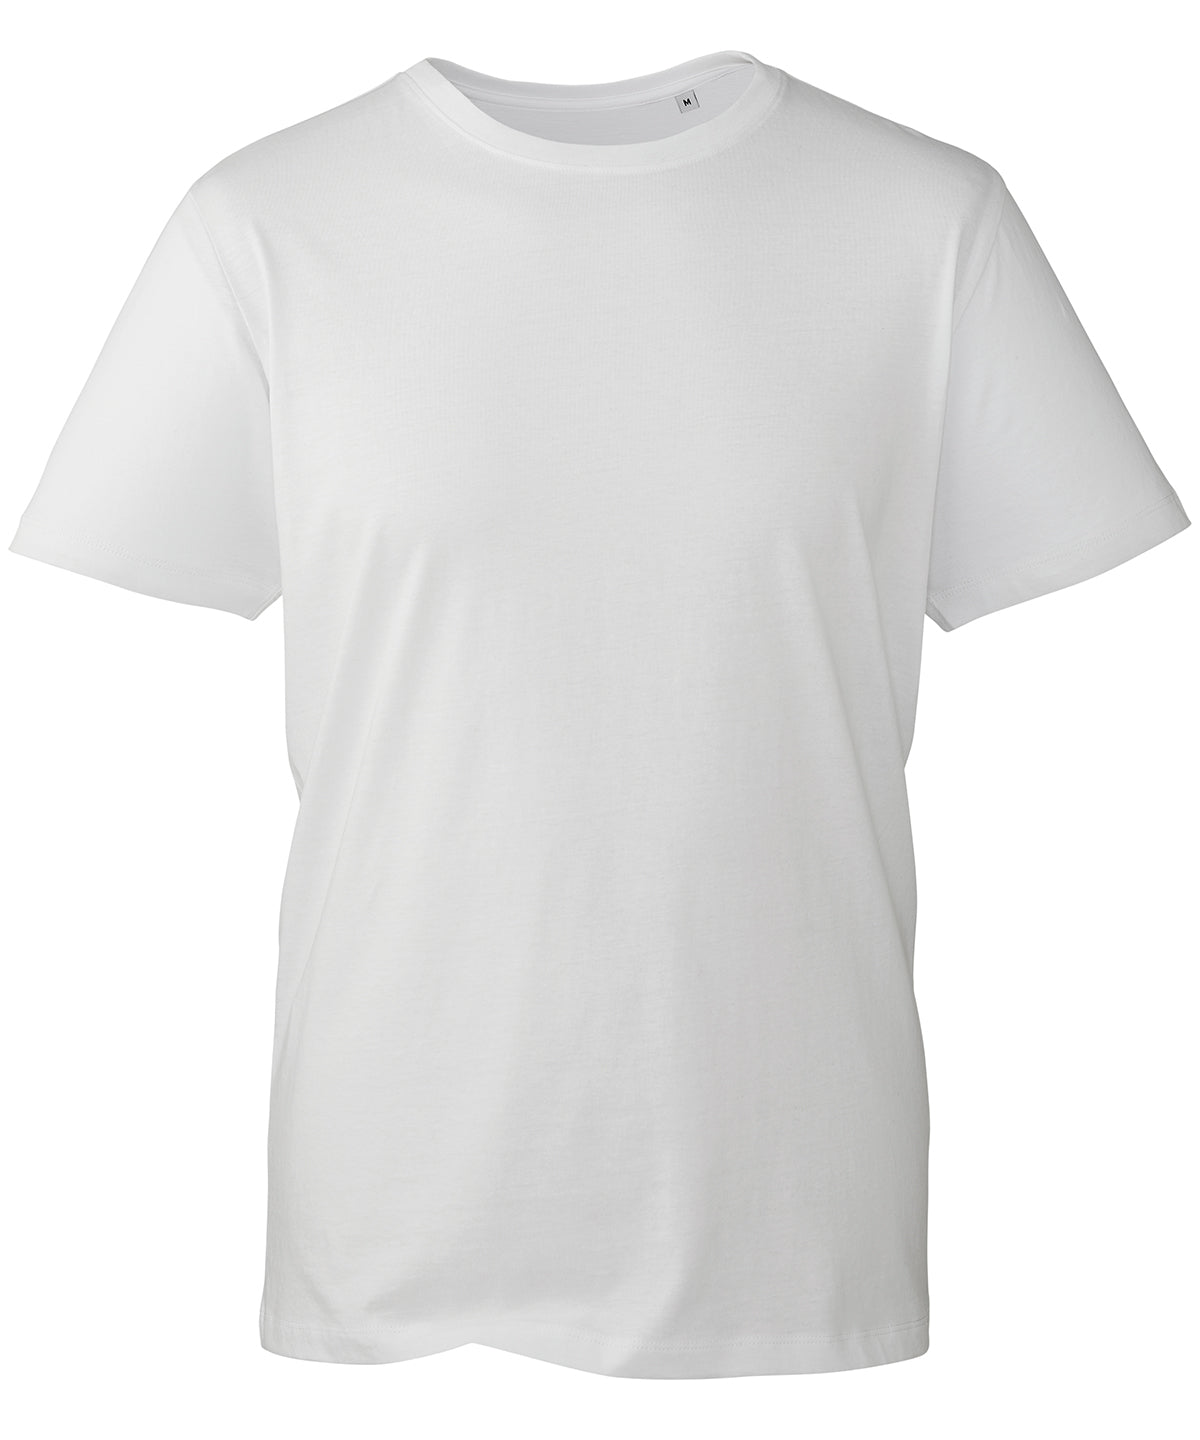 Anthem t-shirt White